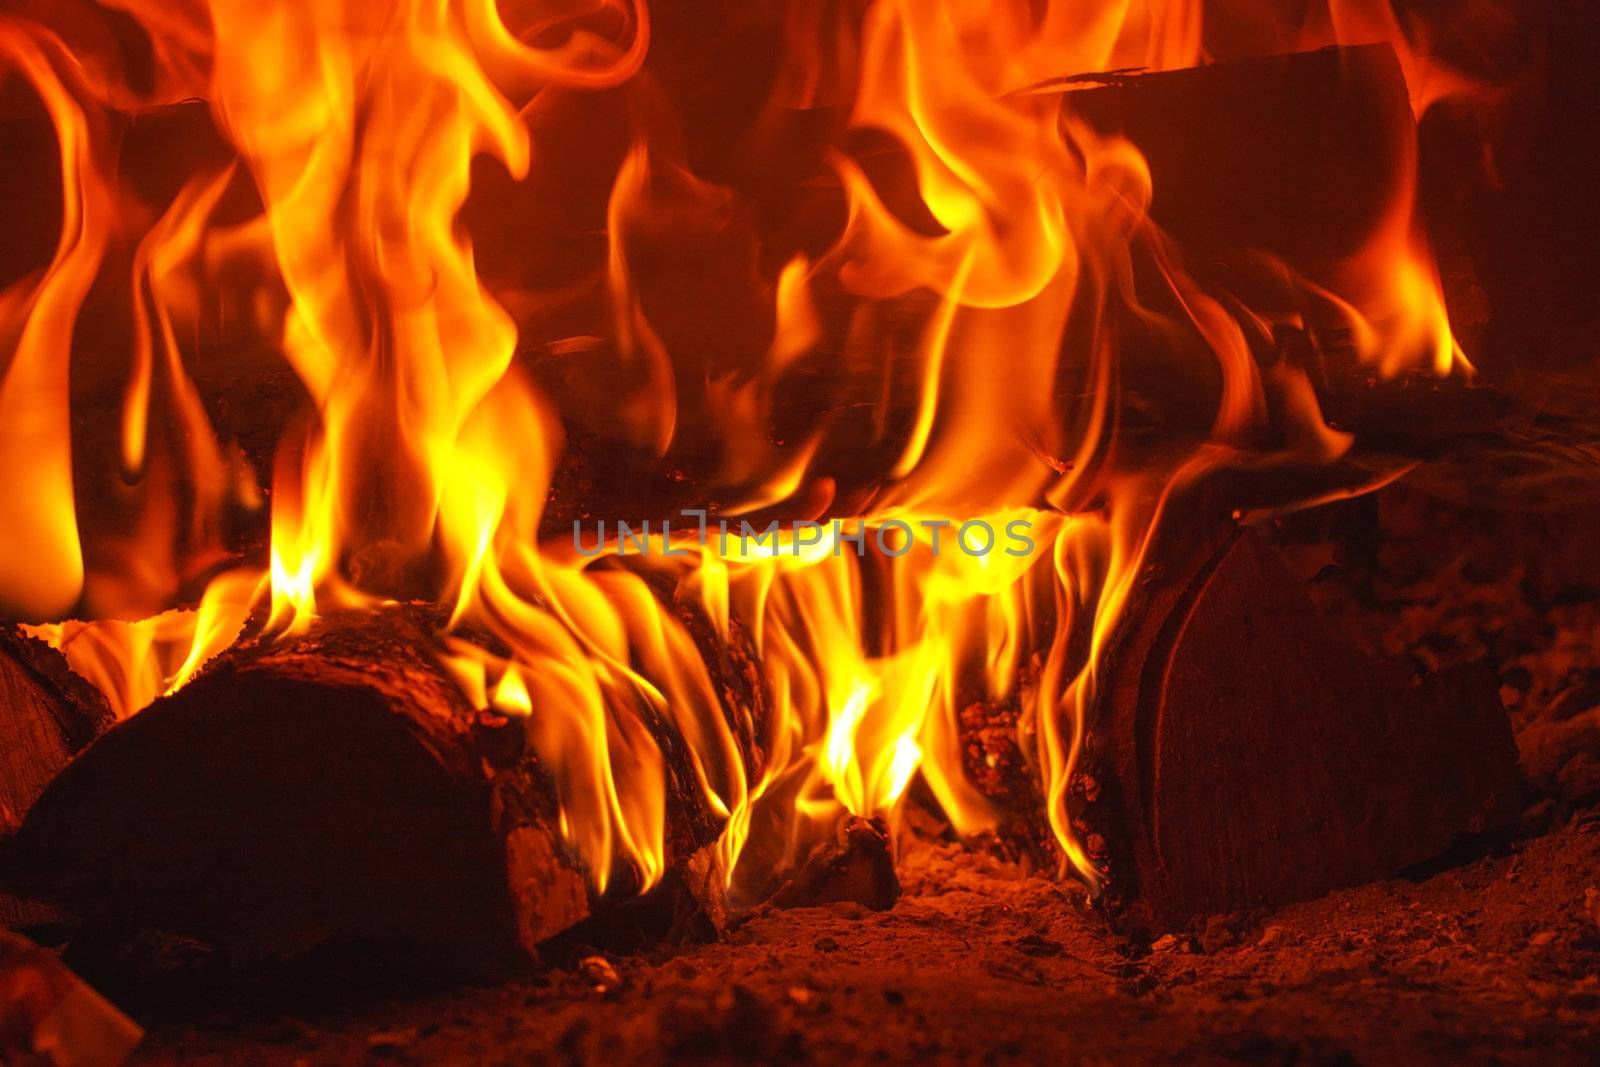 Fire in fireplace by shebeko